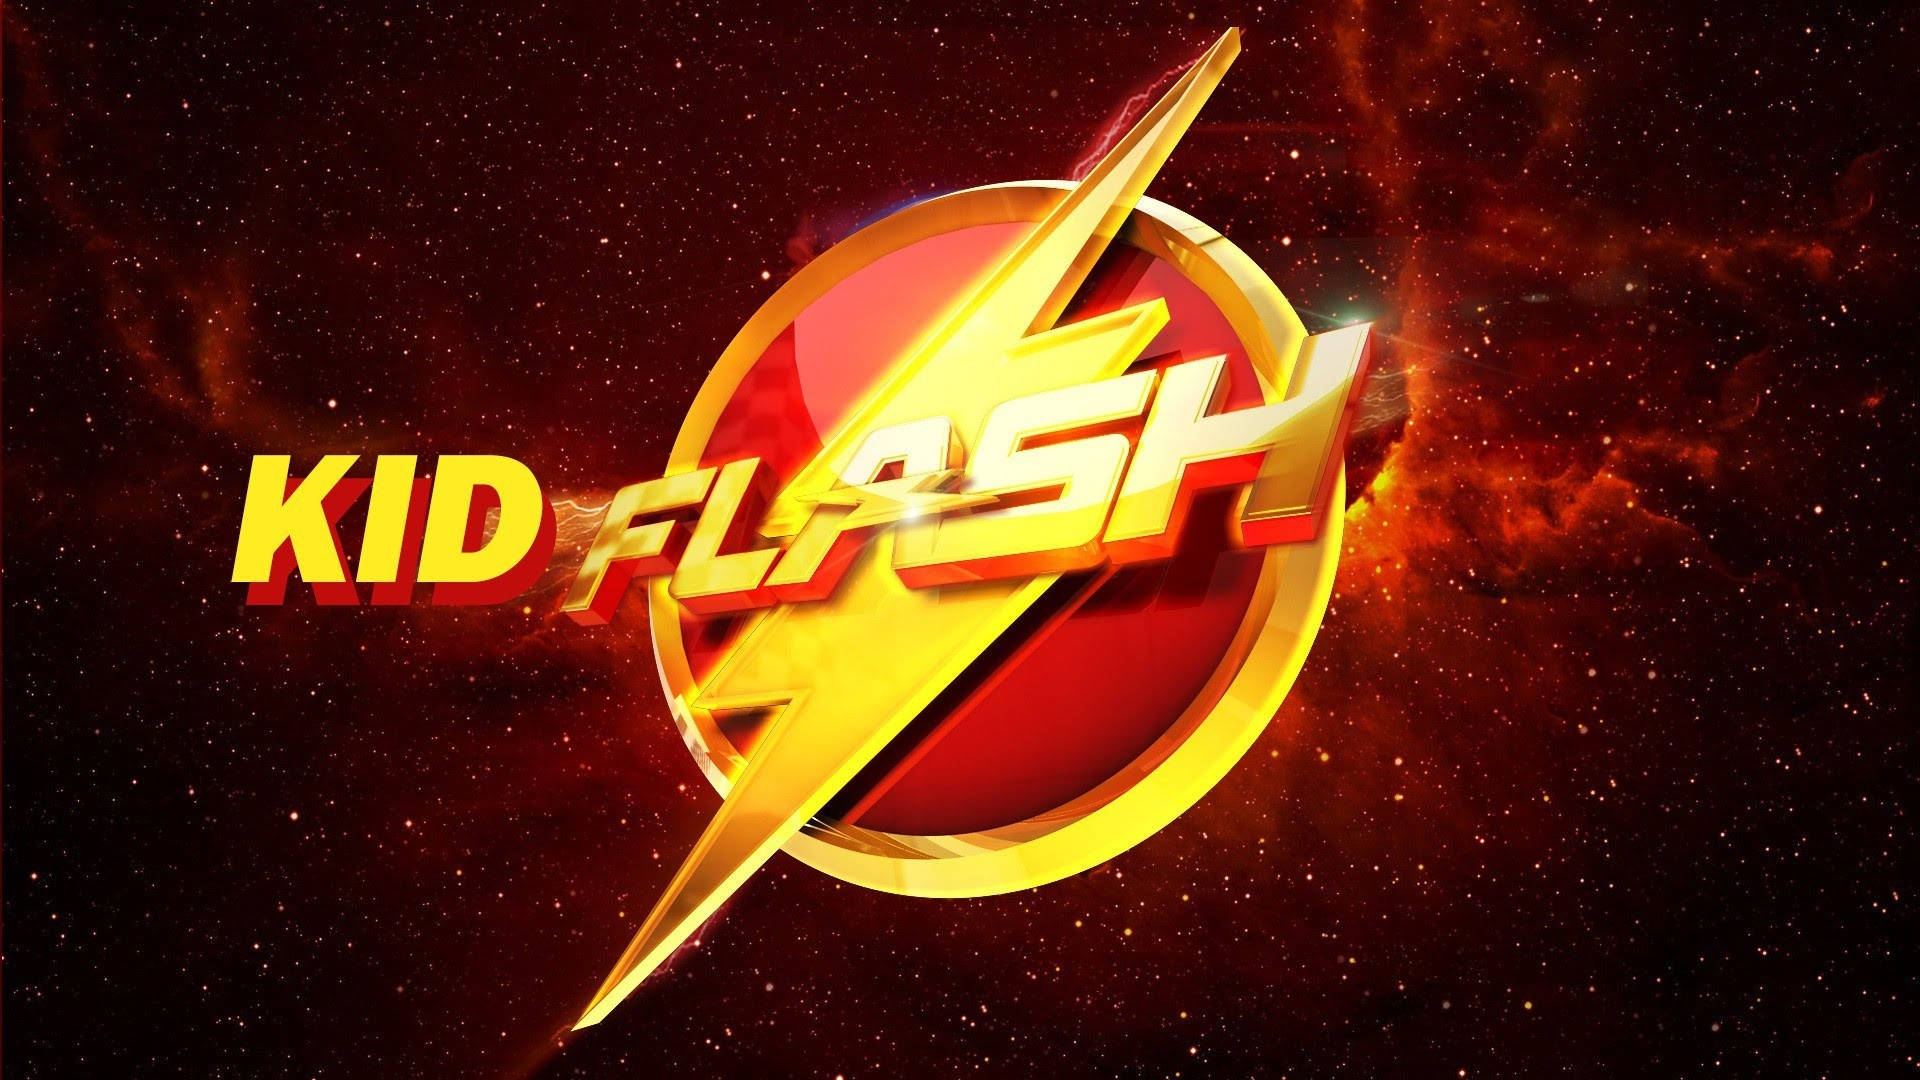 Kid Flash Sign Background